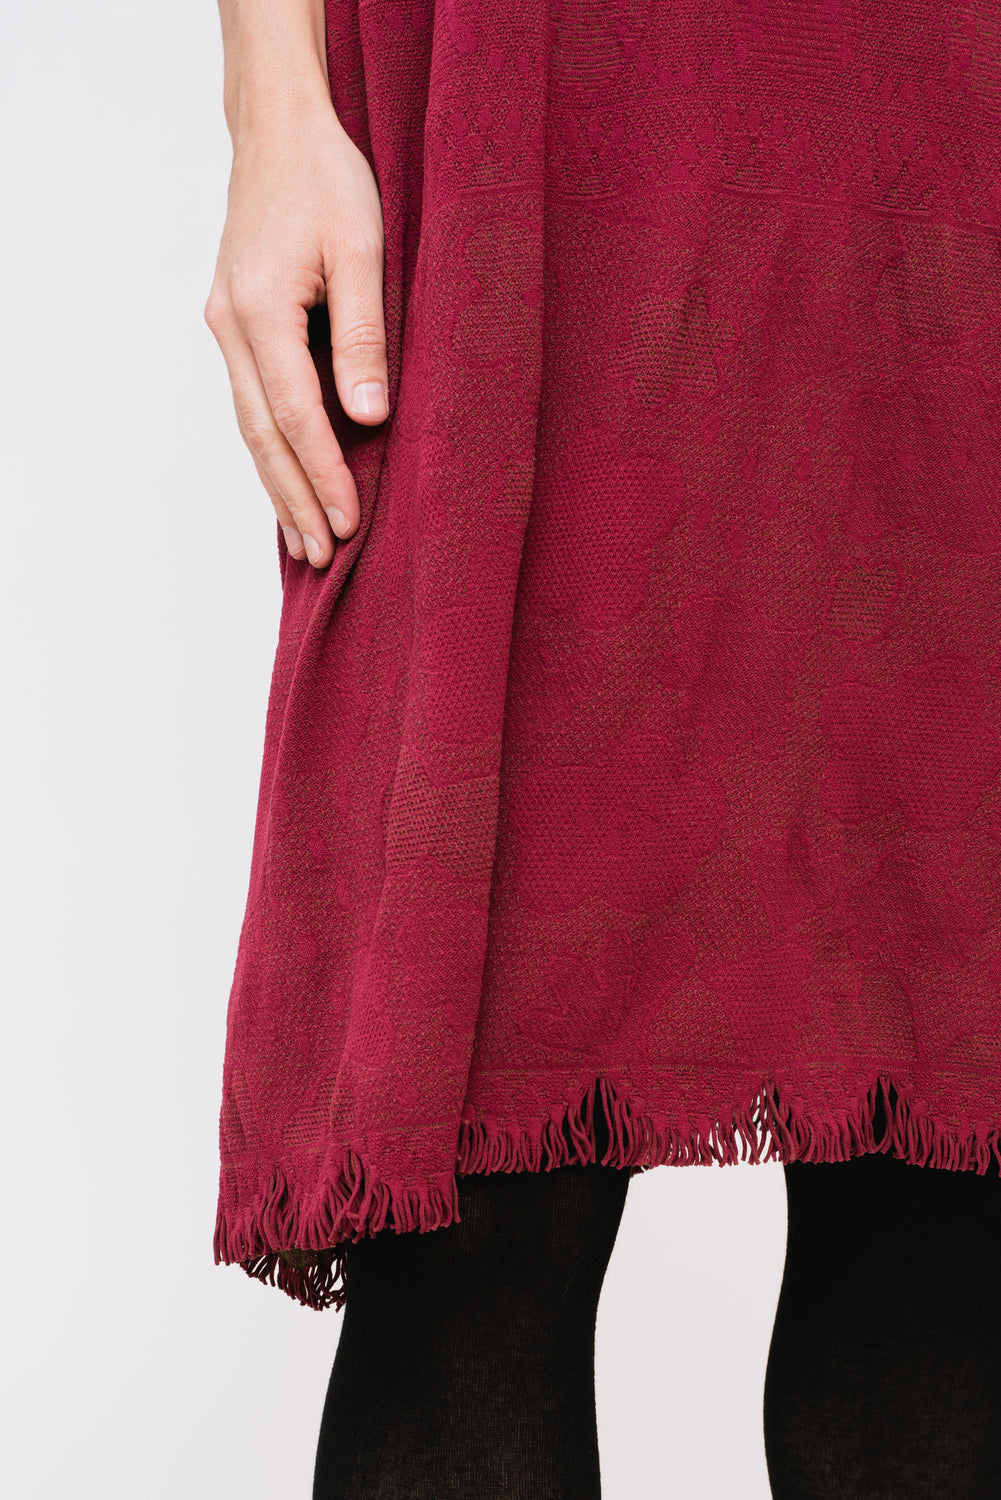 Reversible Knit Lace Dress, Khaki